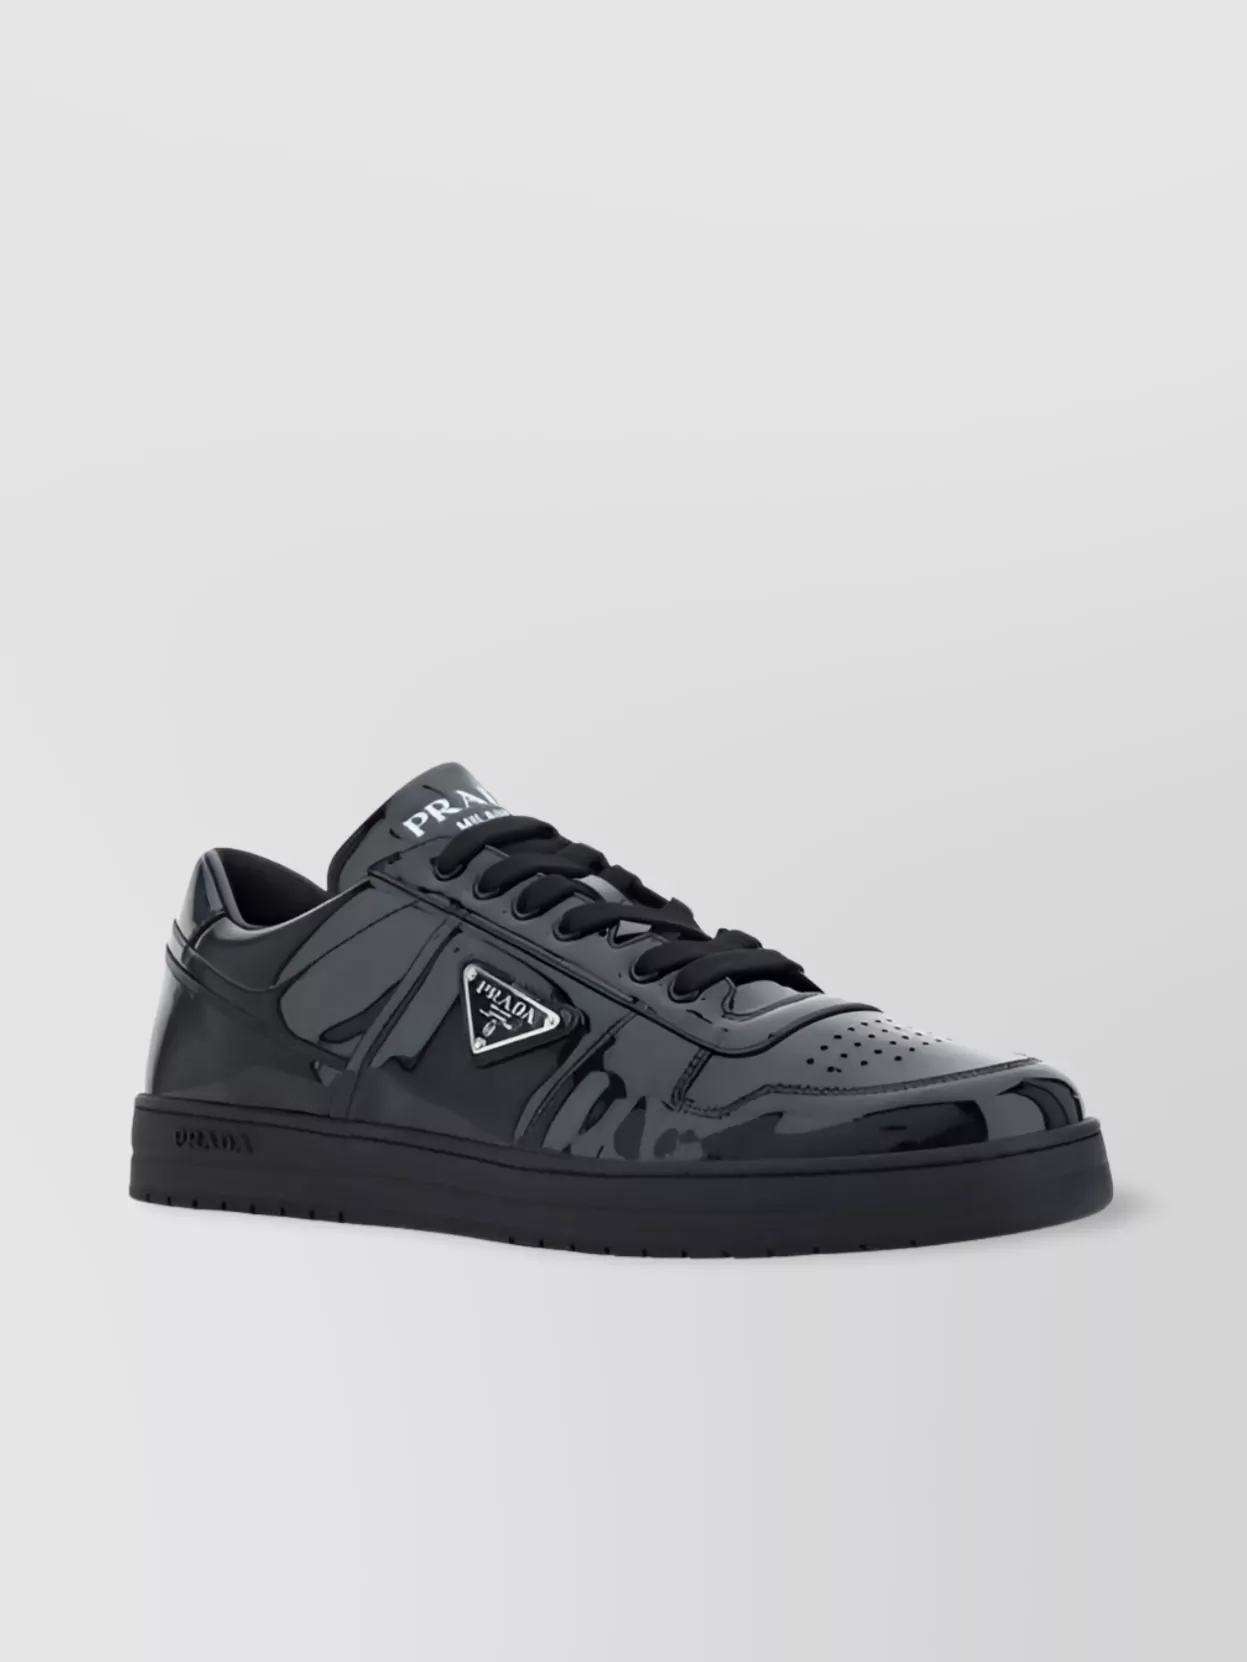 Prada Downtown Calfskin Patent Leather Sneakers In Black